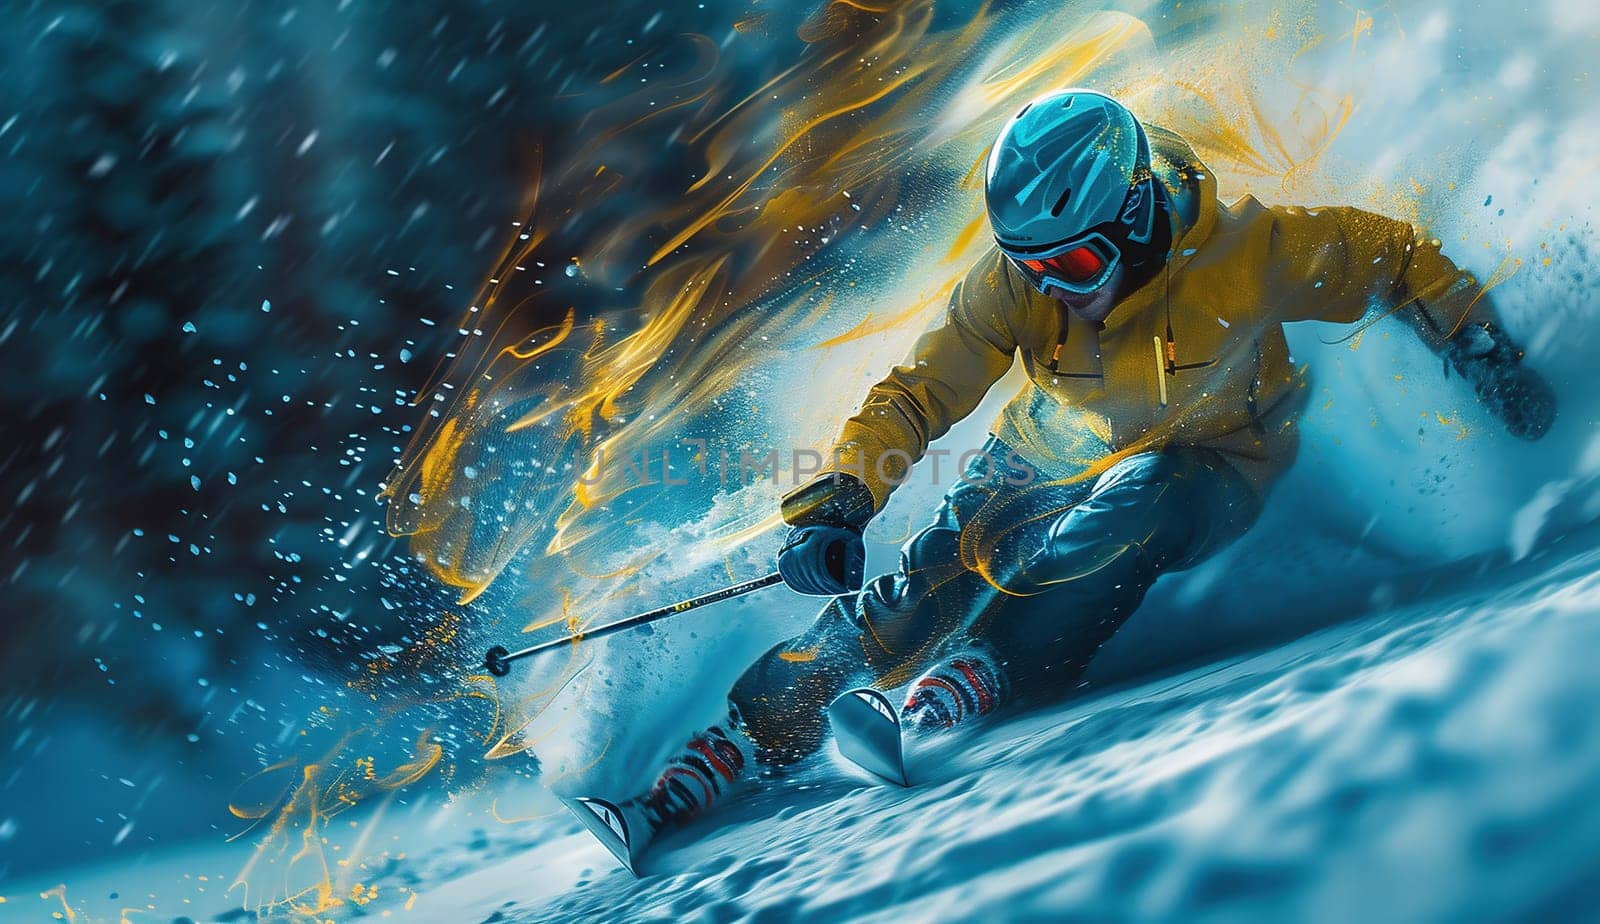 Colored hand sketch skier. illustration by Andelov13